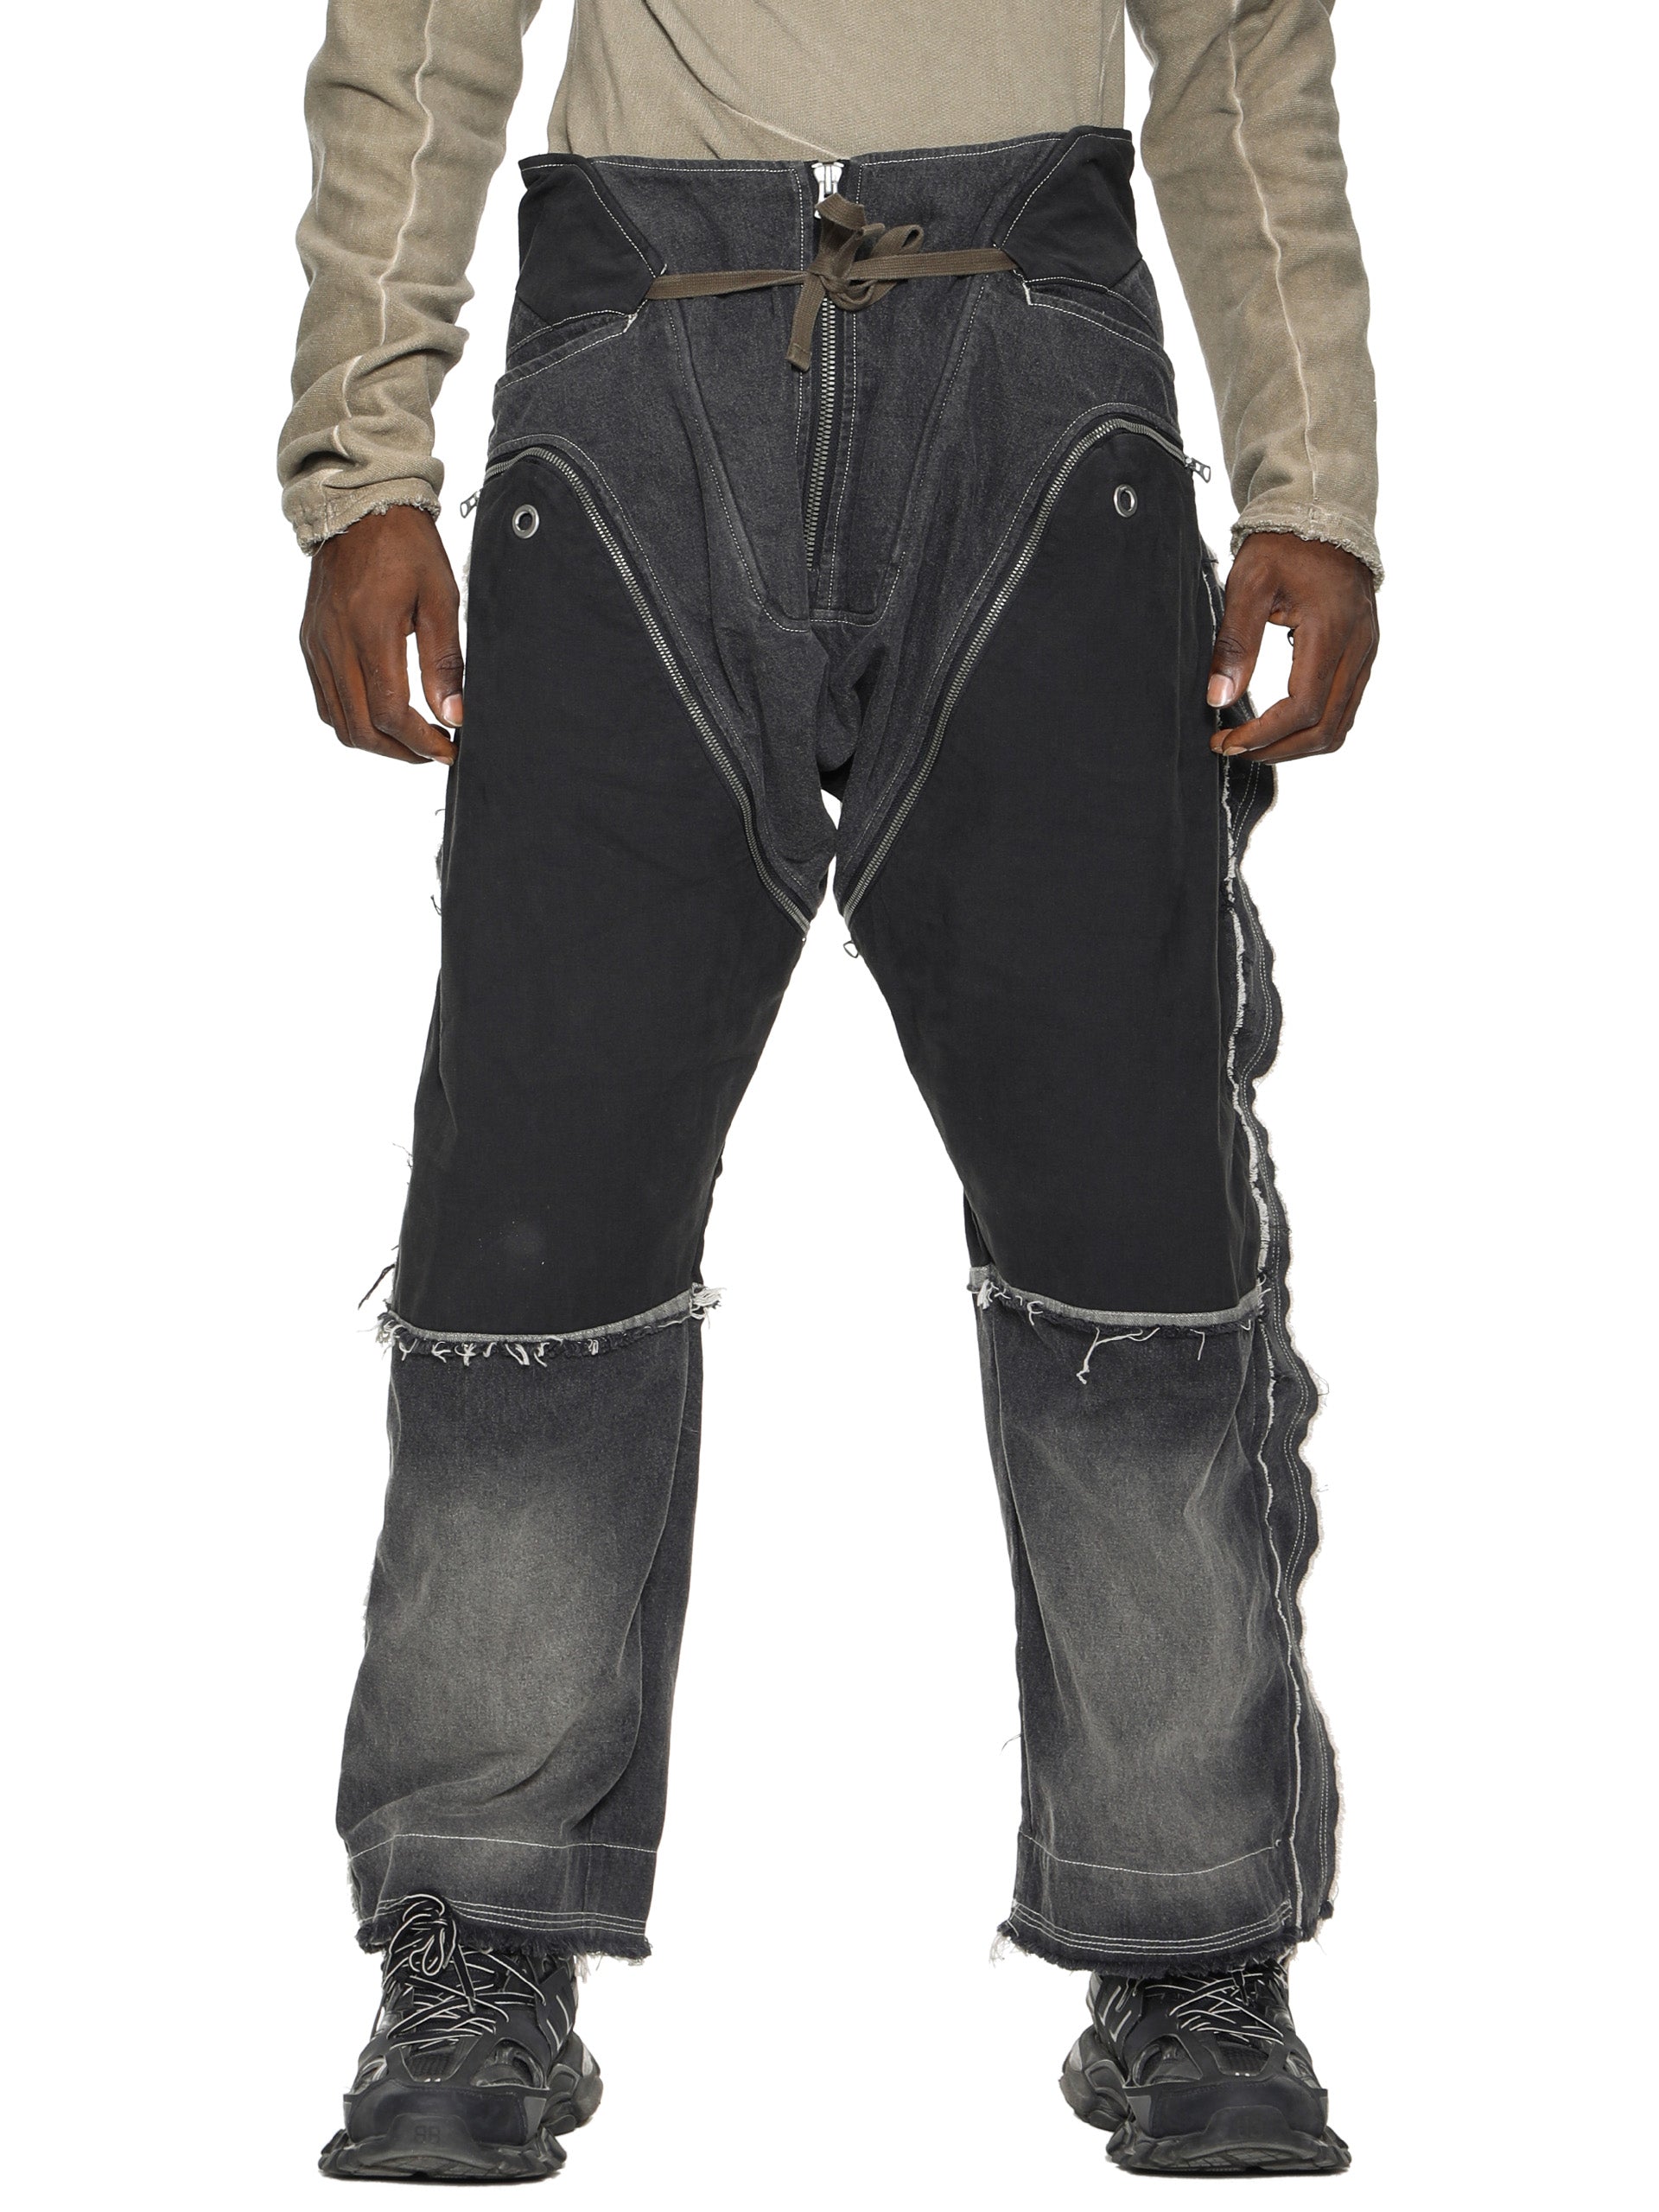 Prmtvsm Contrasting Patchwork Cargo Jeans M / Retro Black